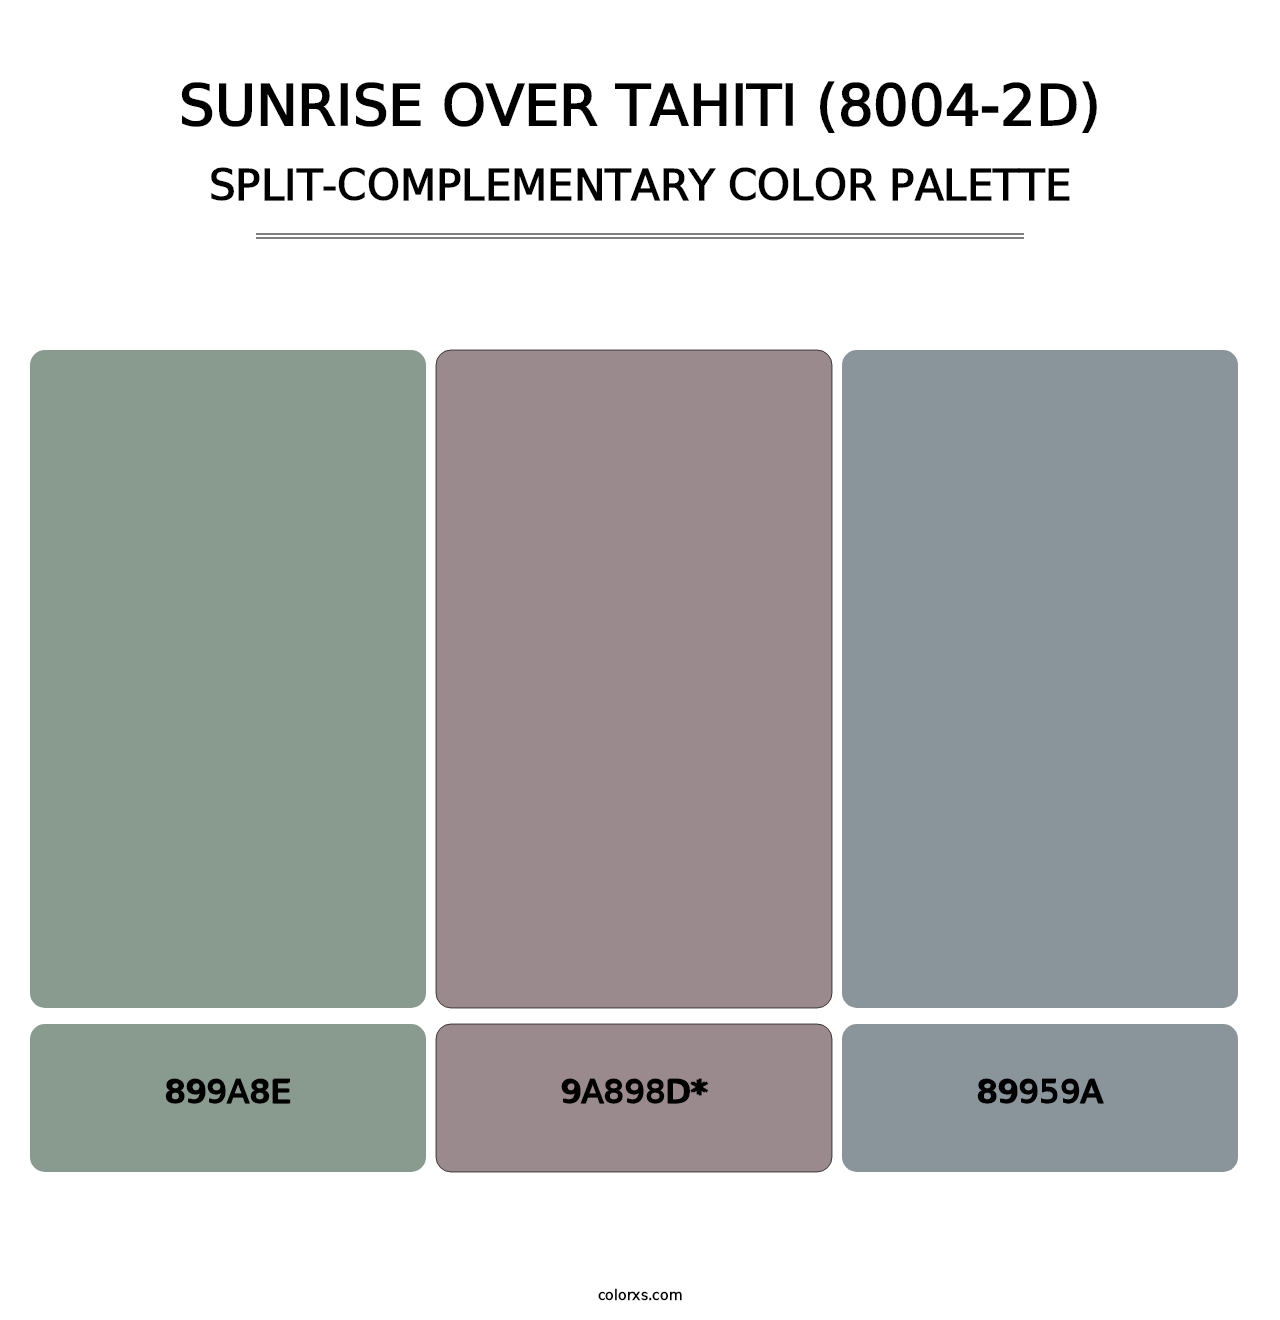 Sunrise Over Tahiti (8004-2D) - Split-Complementary Color Palette